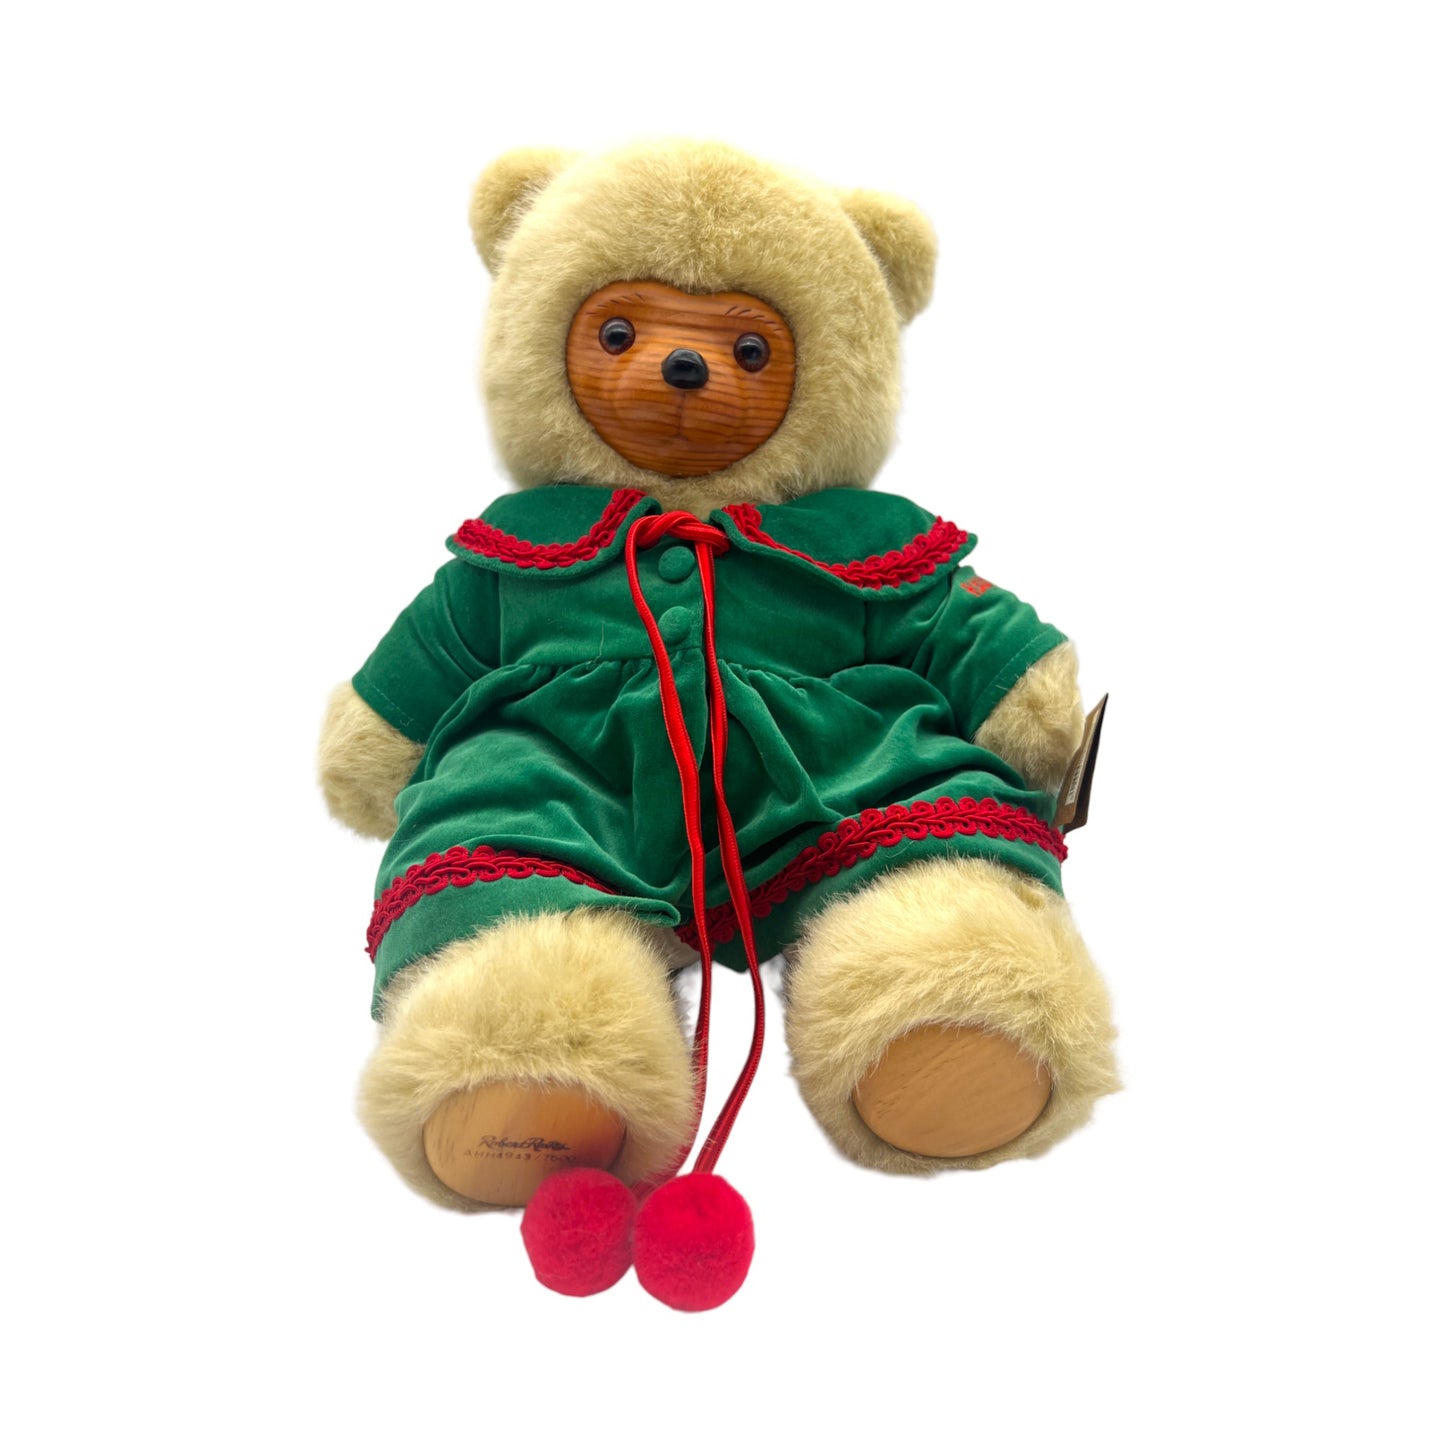 Raikes Applause Bear - Kathie Christmas Bear - #4943 Of 7500 - 15"